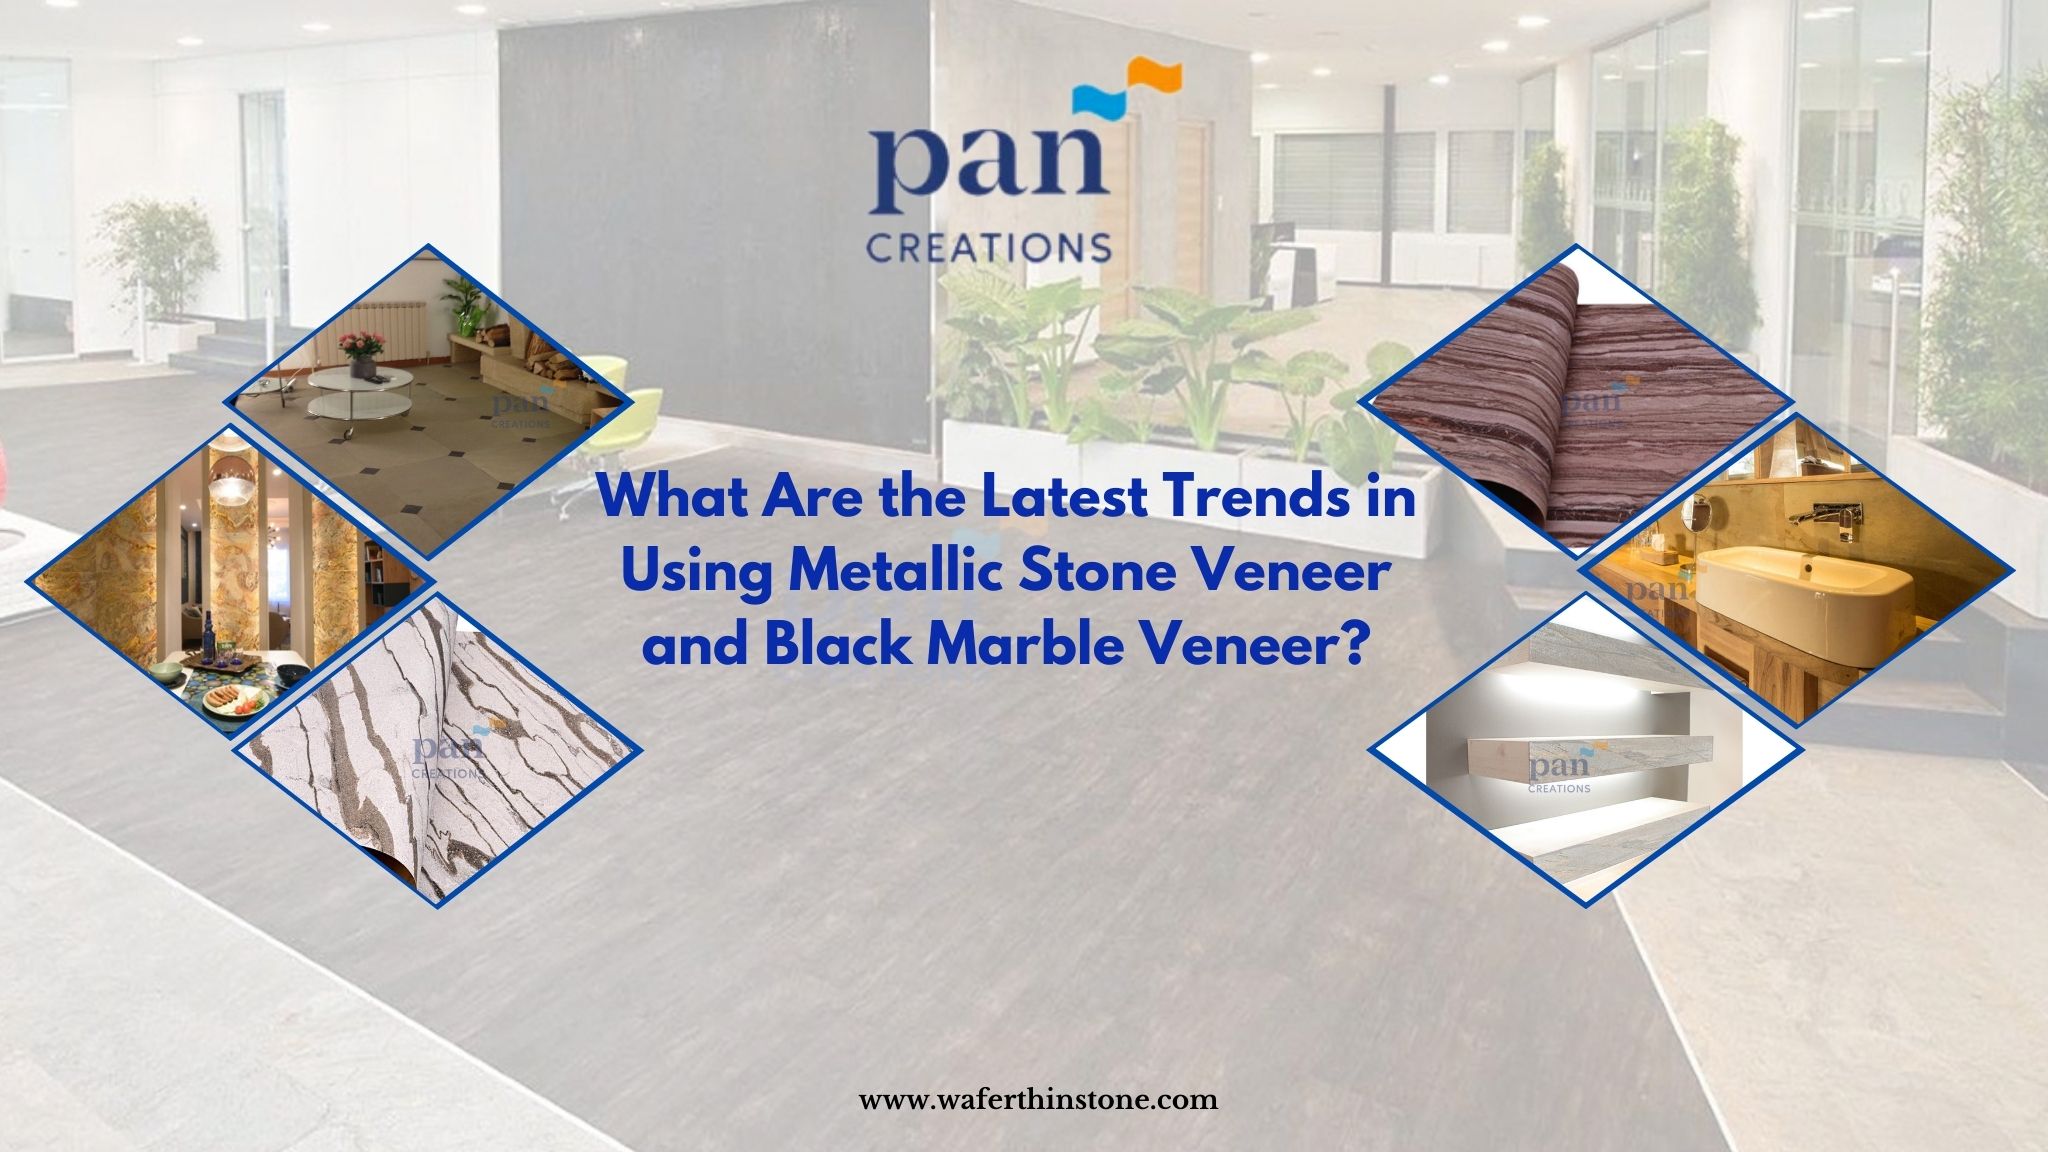 What Are the Latest Trends in Using Metallic Stone Veneer and Black Marble Veneer?